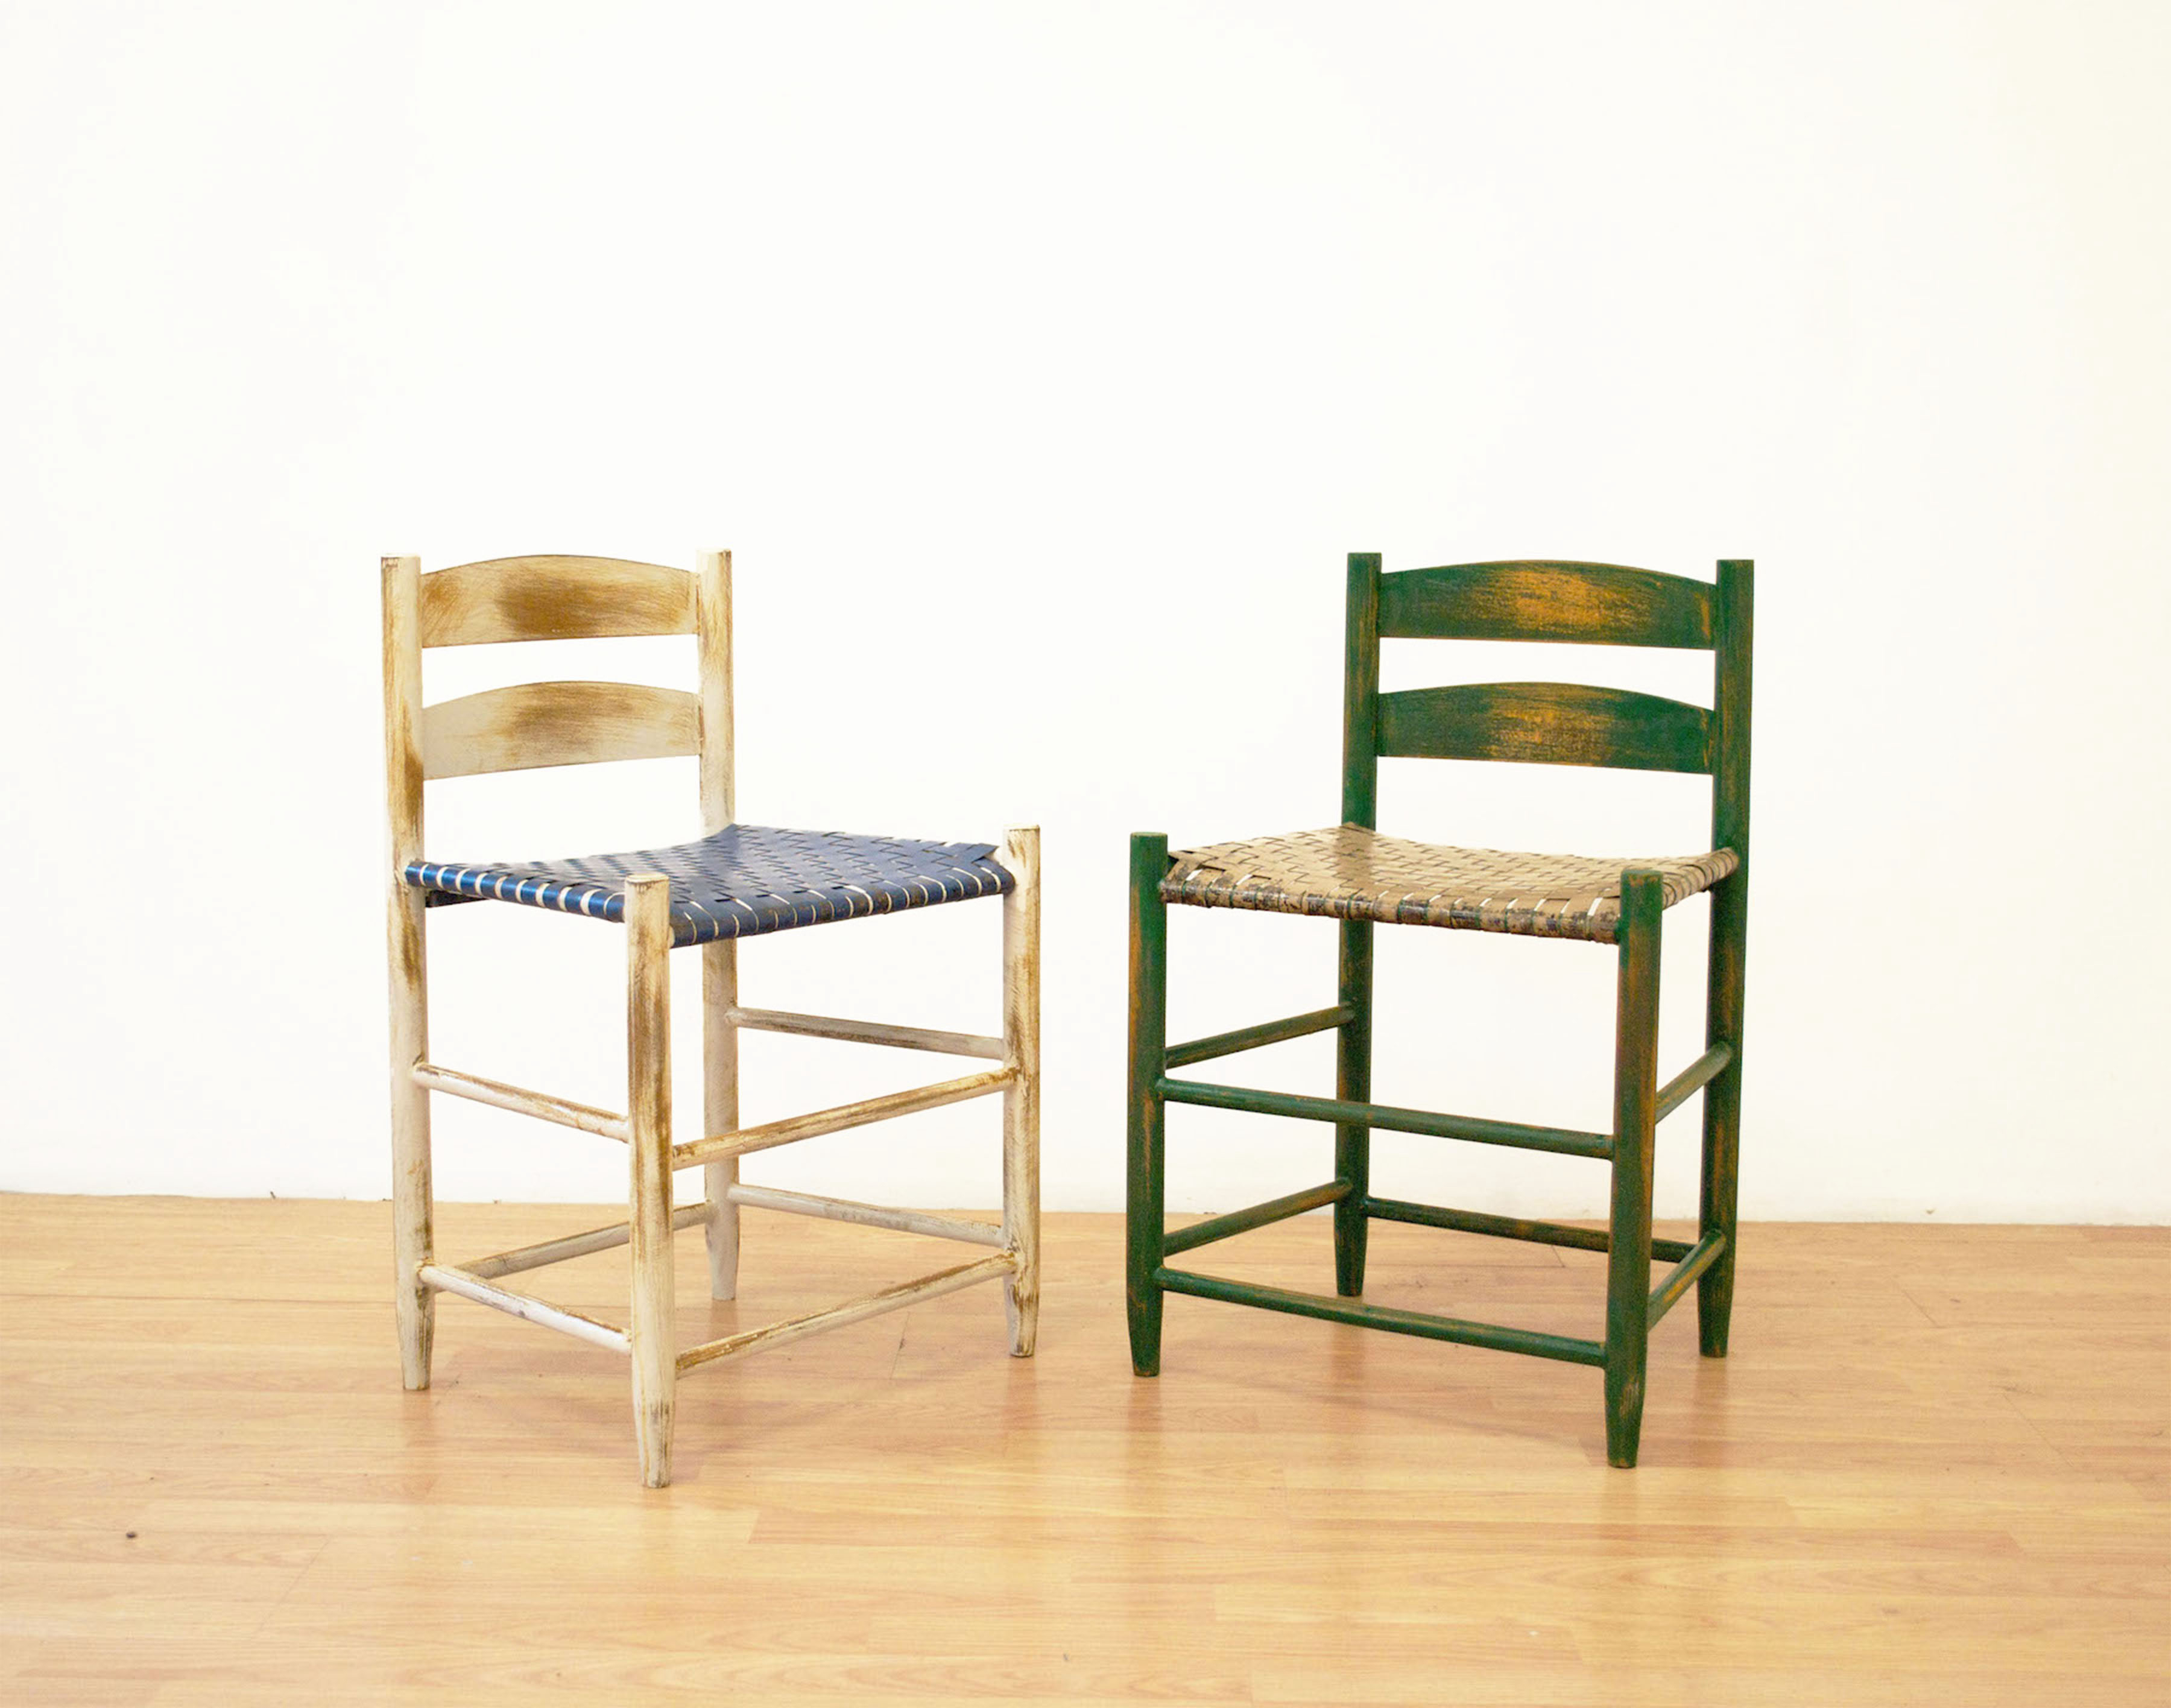 Sophie Glenn Rump Shakers chairs